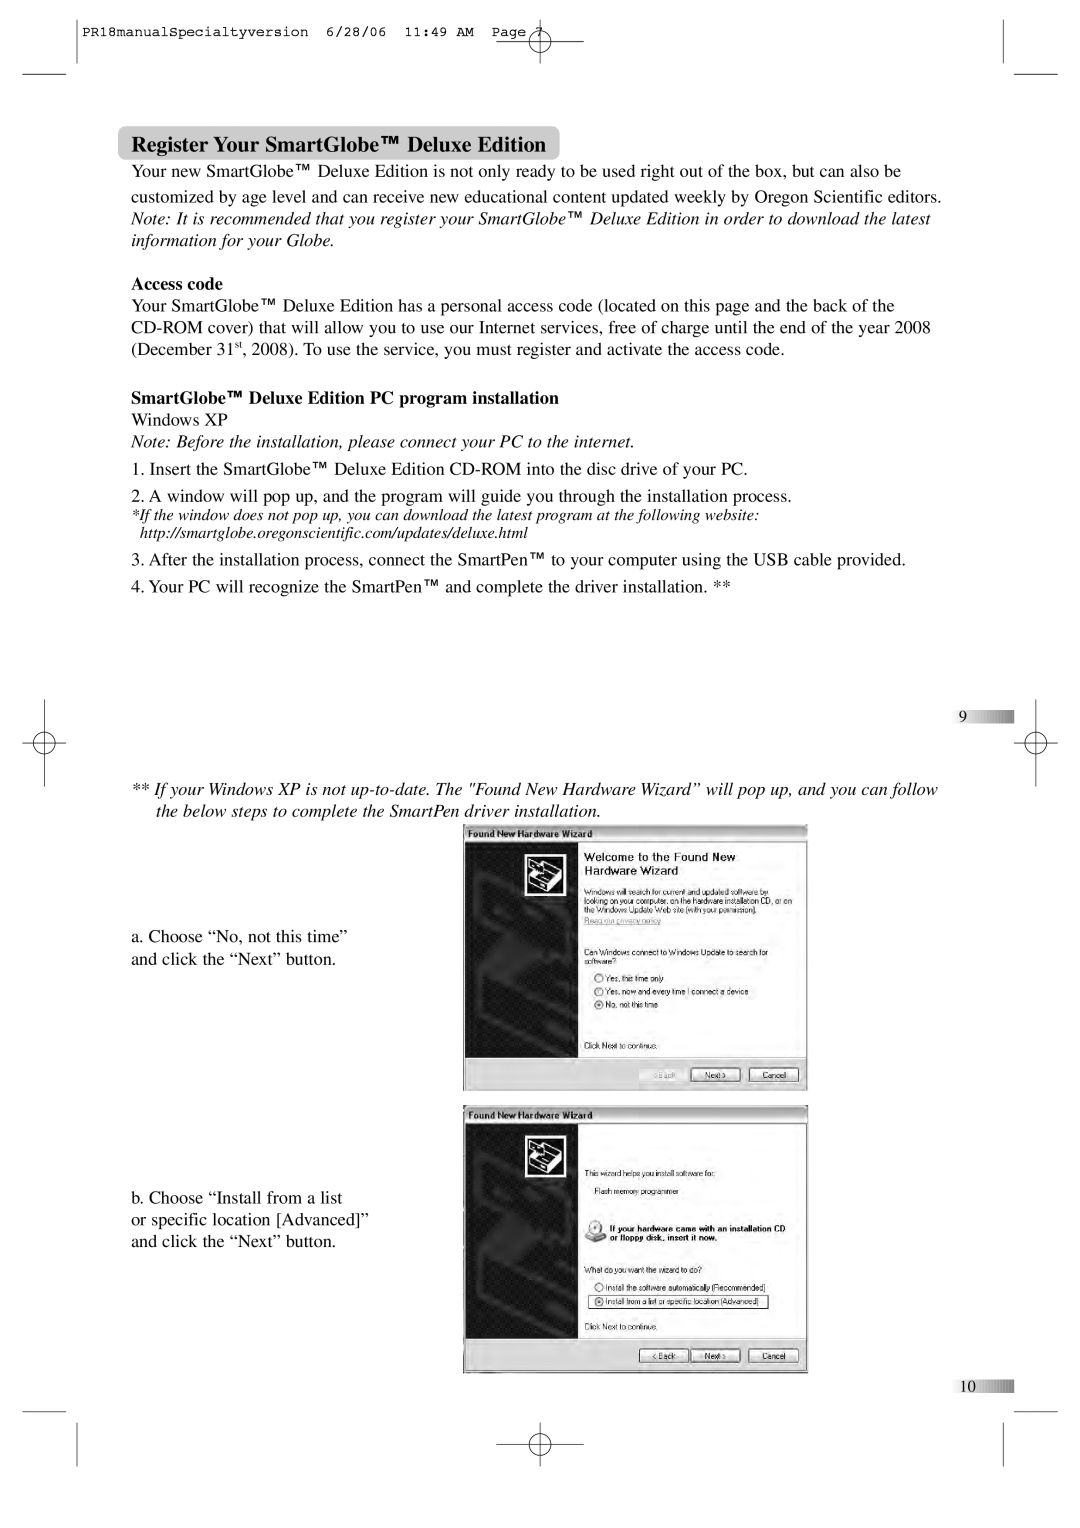 Oregon Scientific AC/DC Adapter manual Register Your SmartGlobe Deluxe Edition, Access code 